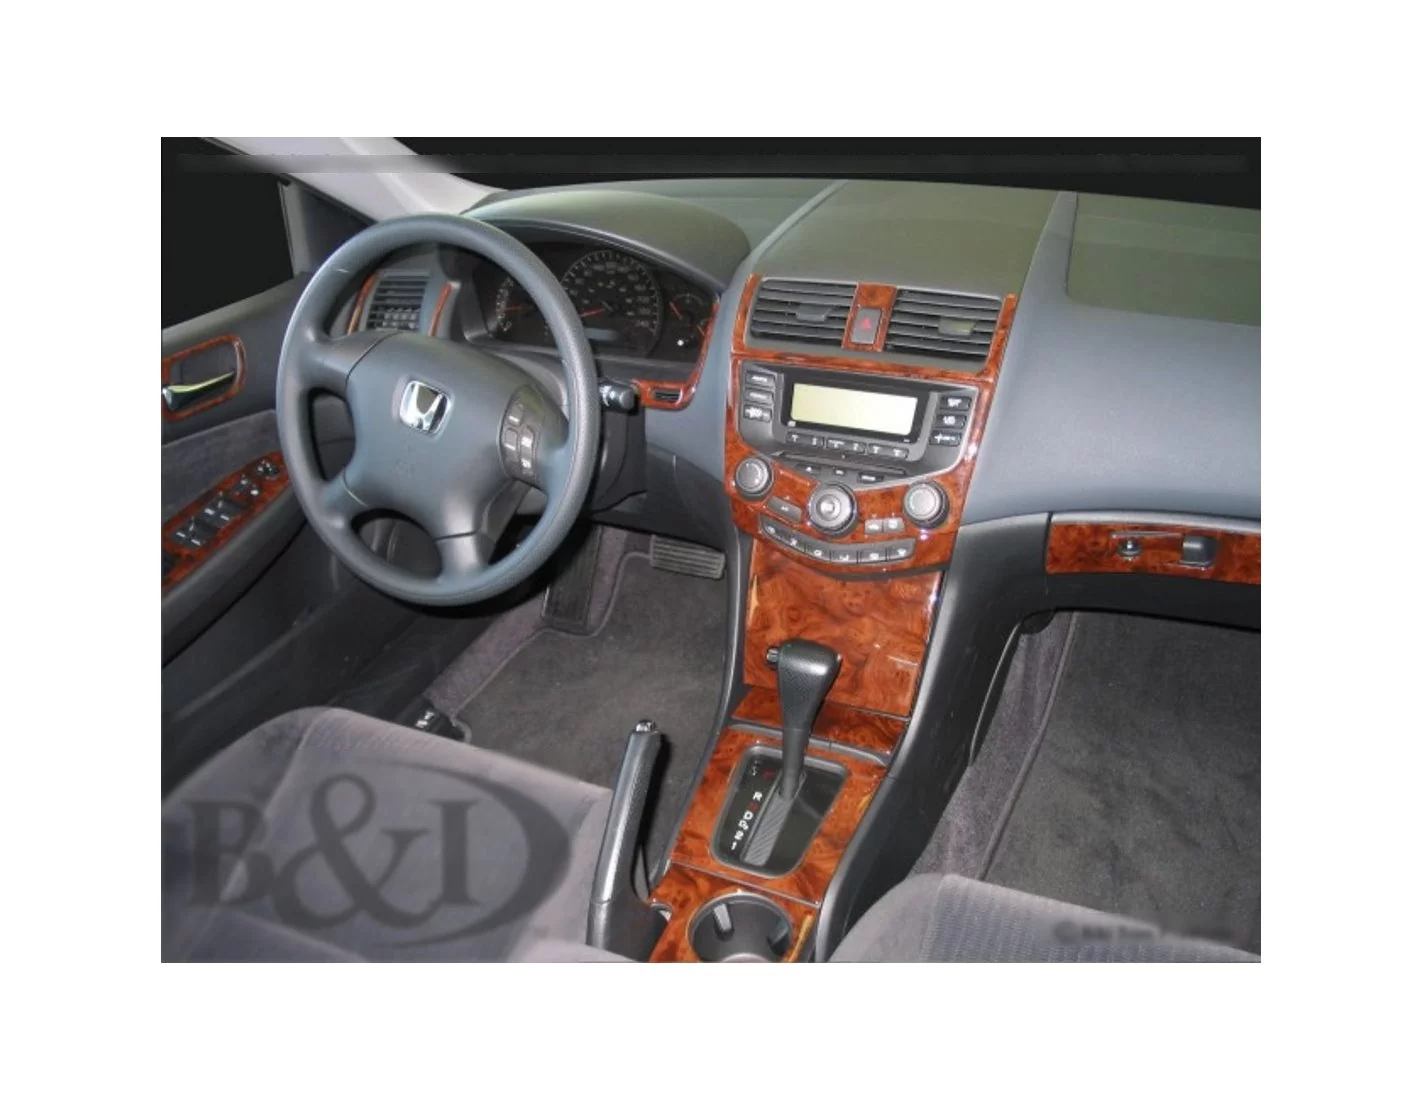 Honda Accord 2003-2007 Full Set, With NAVI system, 4 Doors Interior BD Dash Trim Kit